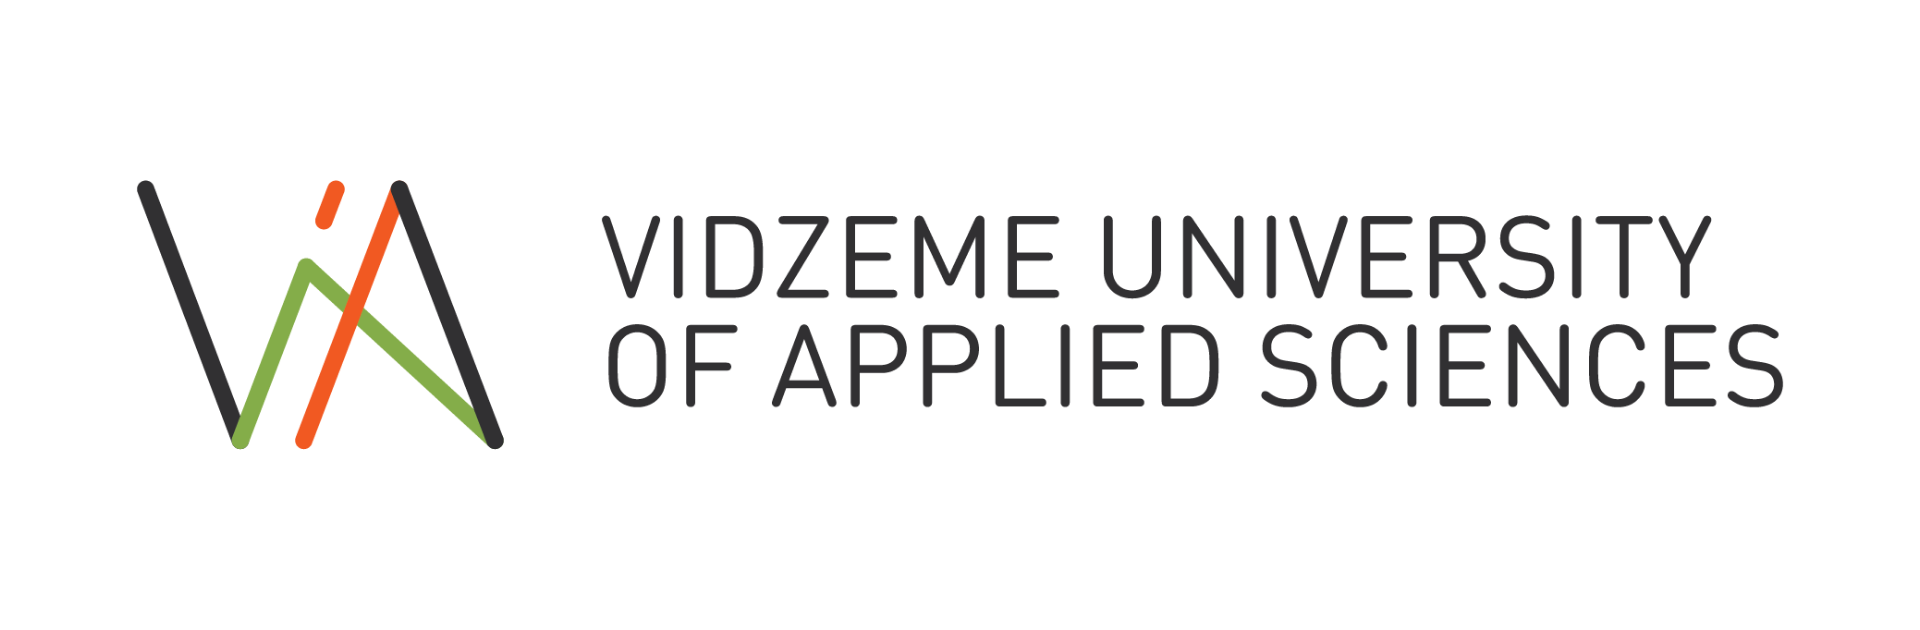 Vidzeme University of Applied Sciences 